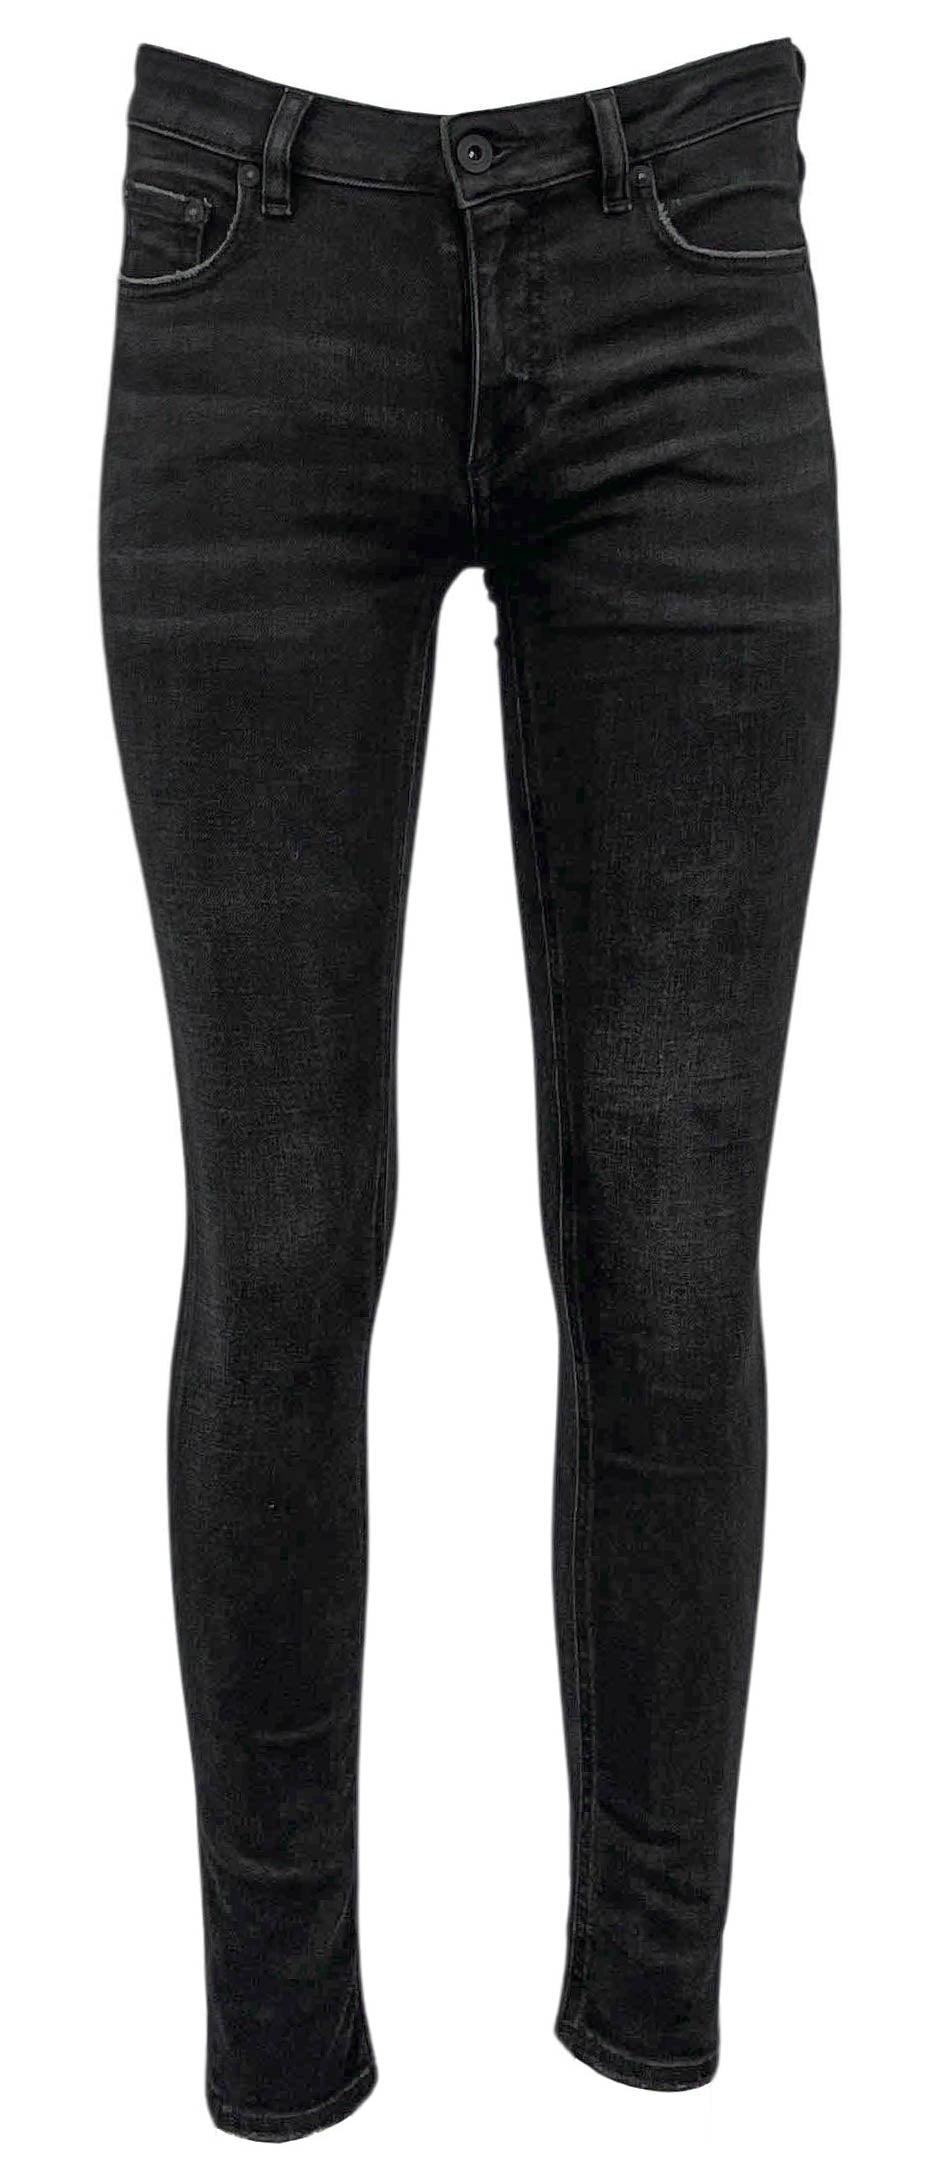 Off-White Diagonal Stripe Skinny Jean in Black - Discounts on Off White at UAL